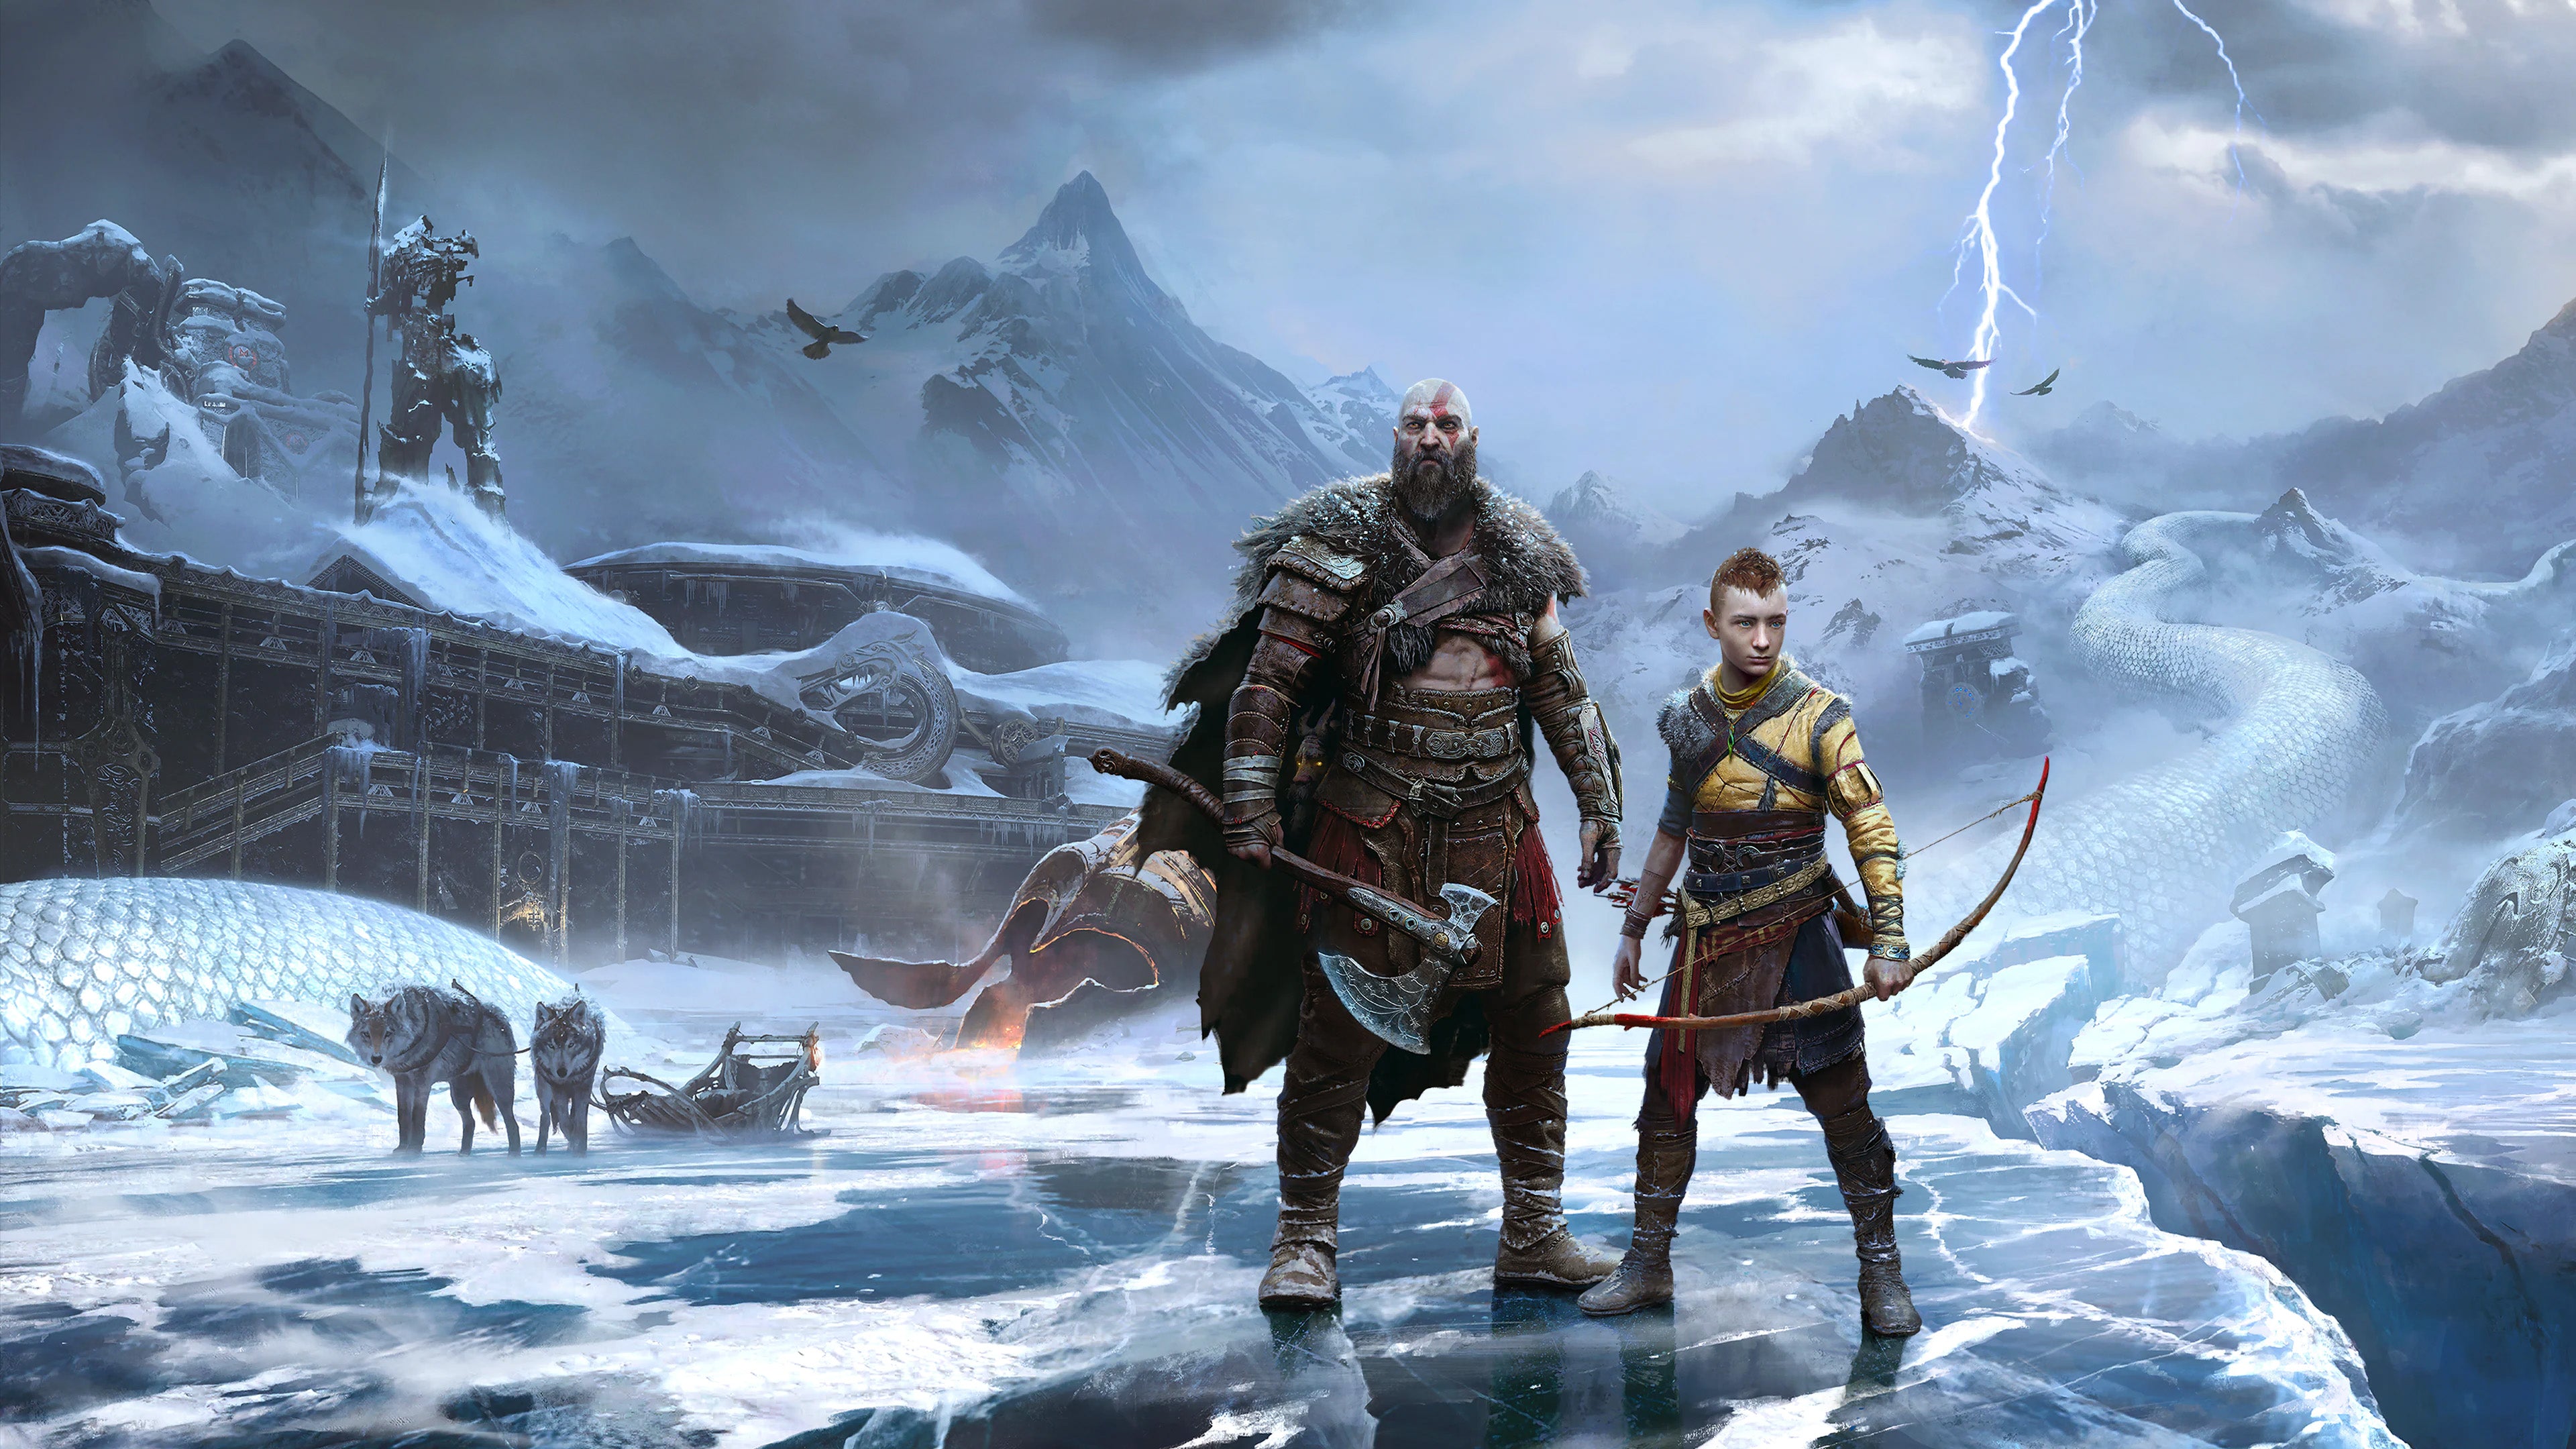 PlayStation 5 God of War Ragnarök Full Game Voucher for PS5 and PS4